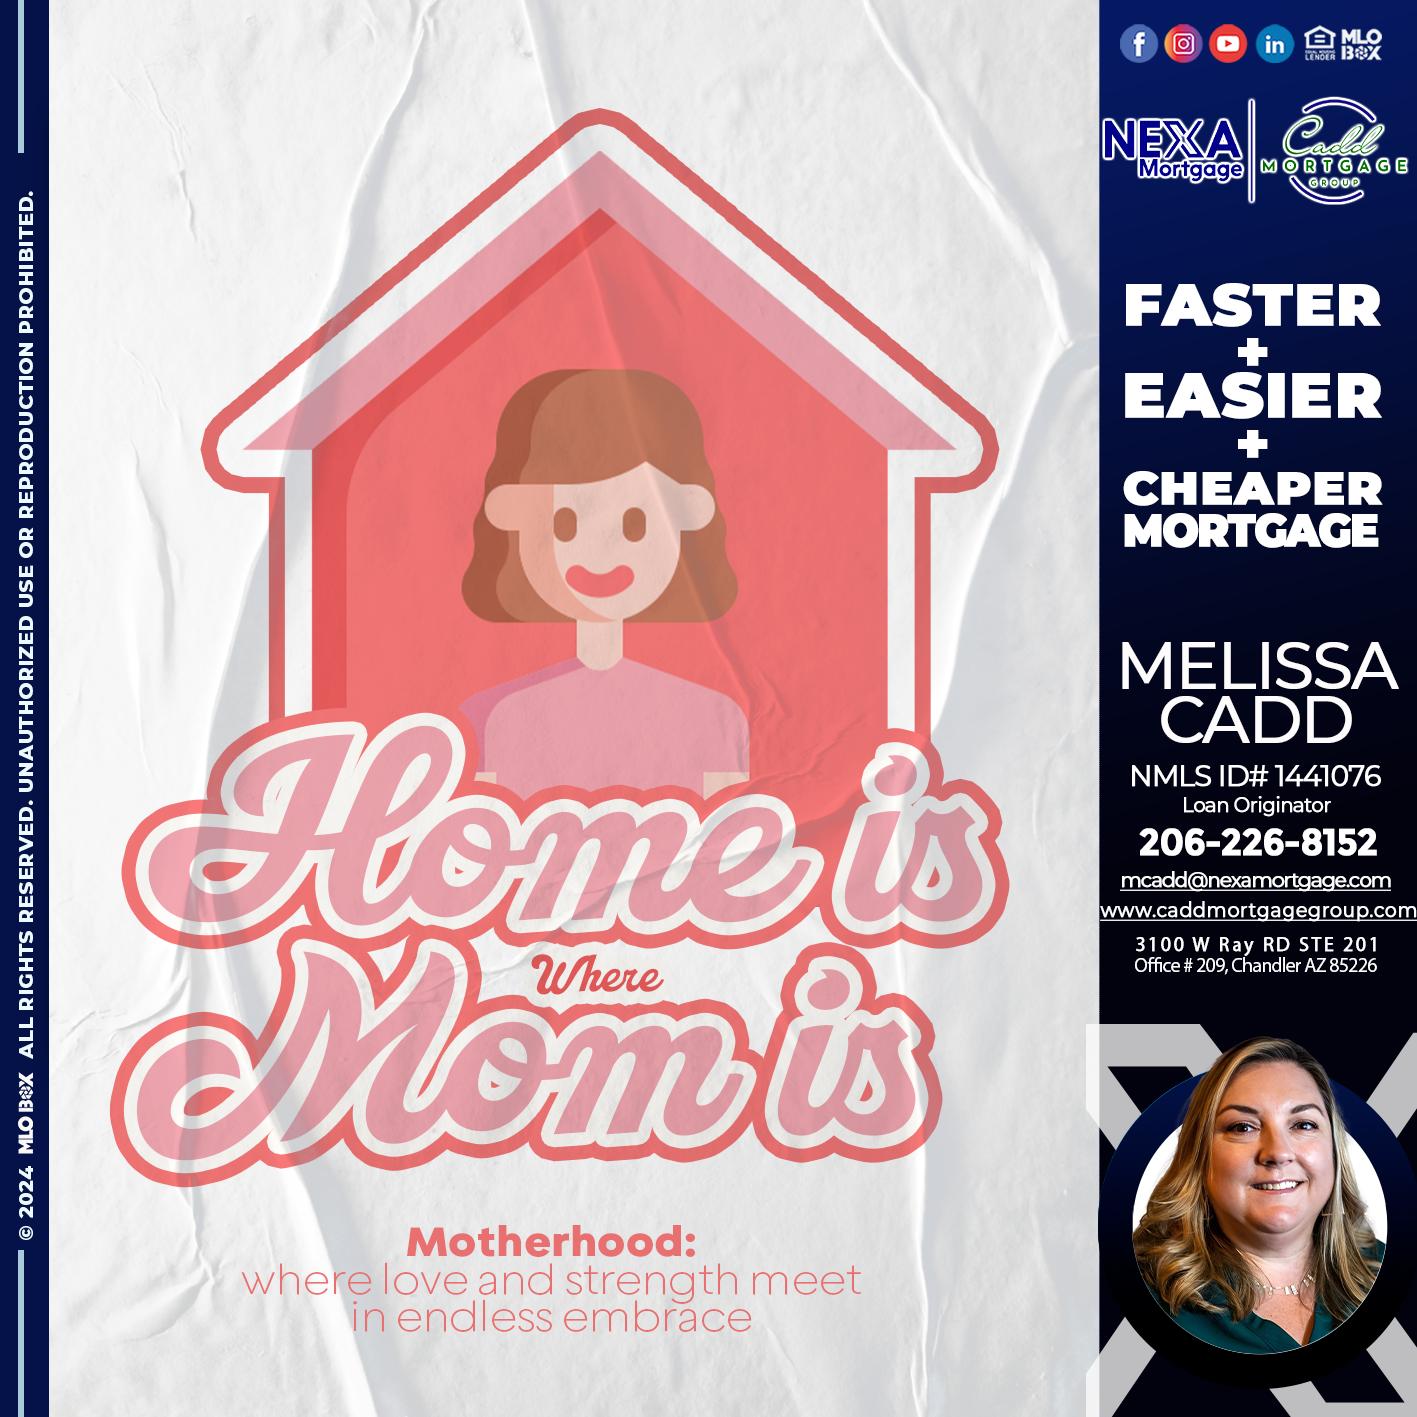 HOME IS WHERE - Melissa Cadd -Loan Originator